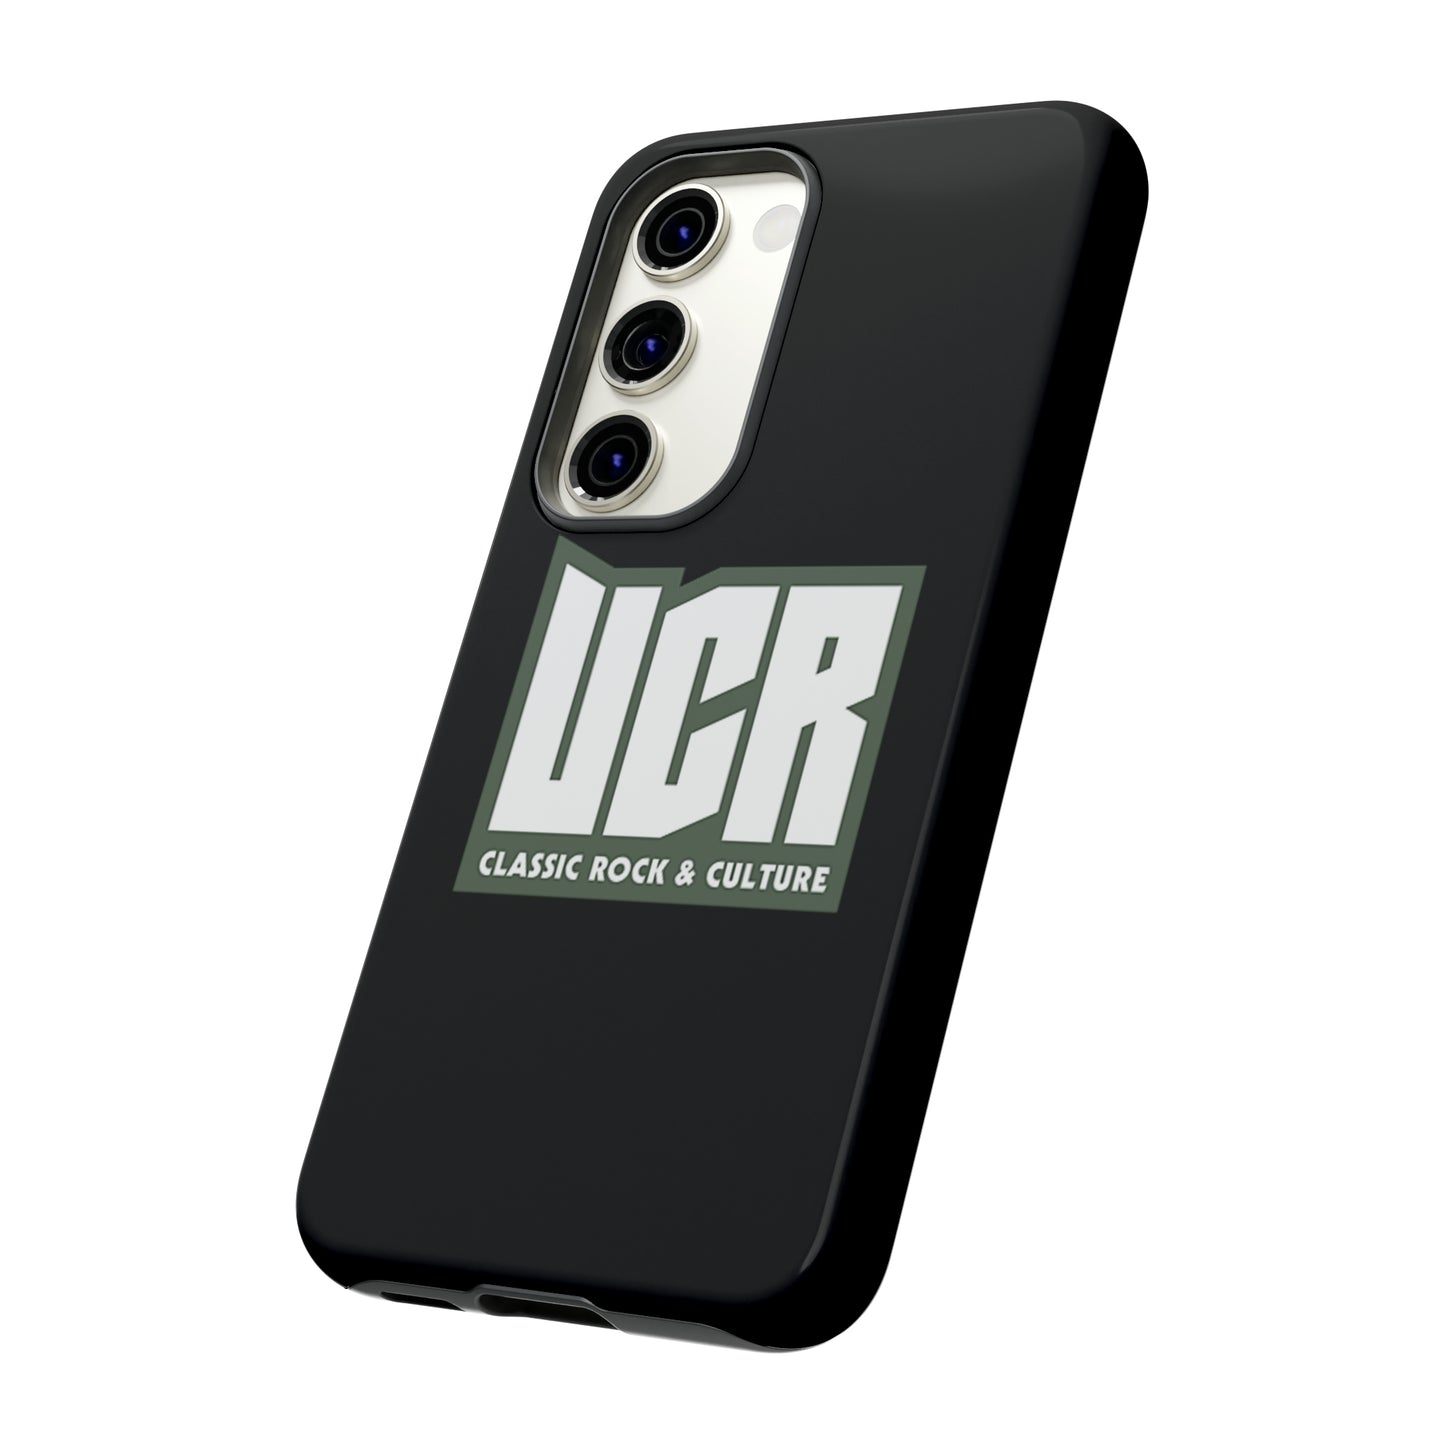 UCR Phone Case